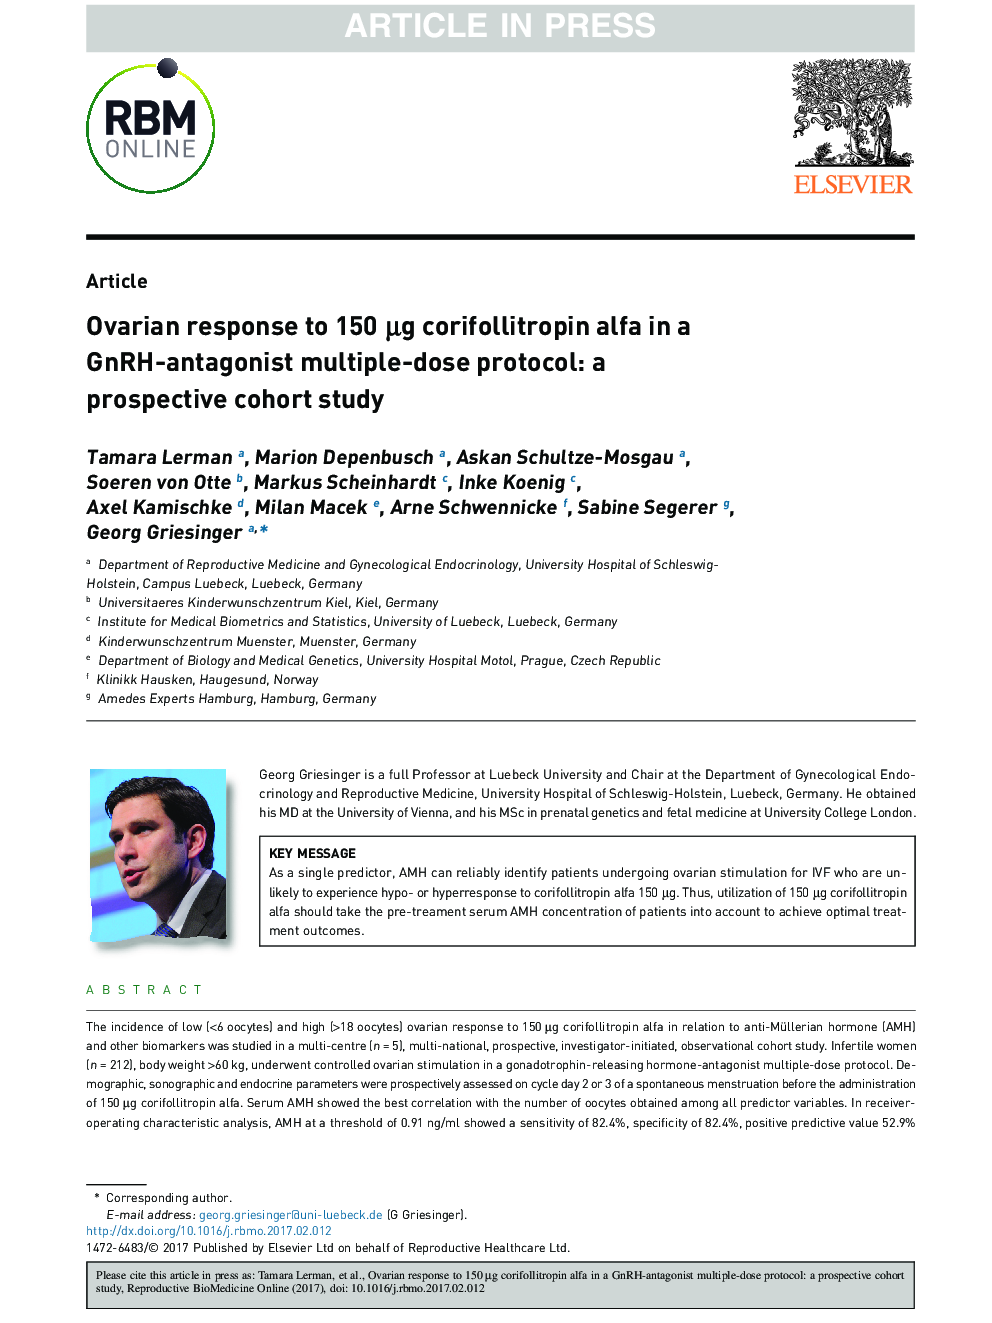 Ovarian response to 150âÂµg corifollitropin alfa in a GnRH-antagonist multiple-dose protocol: a prospective cohort study